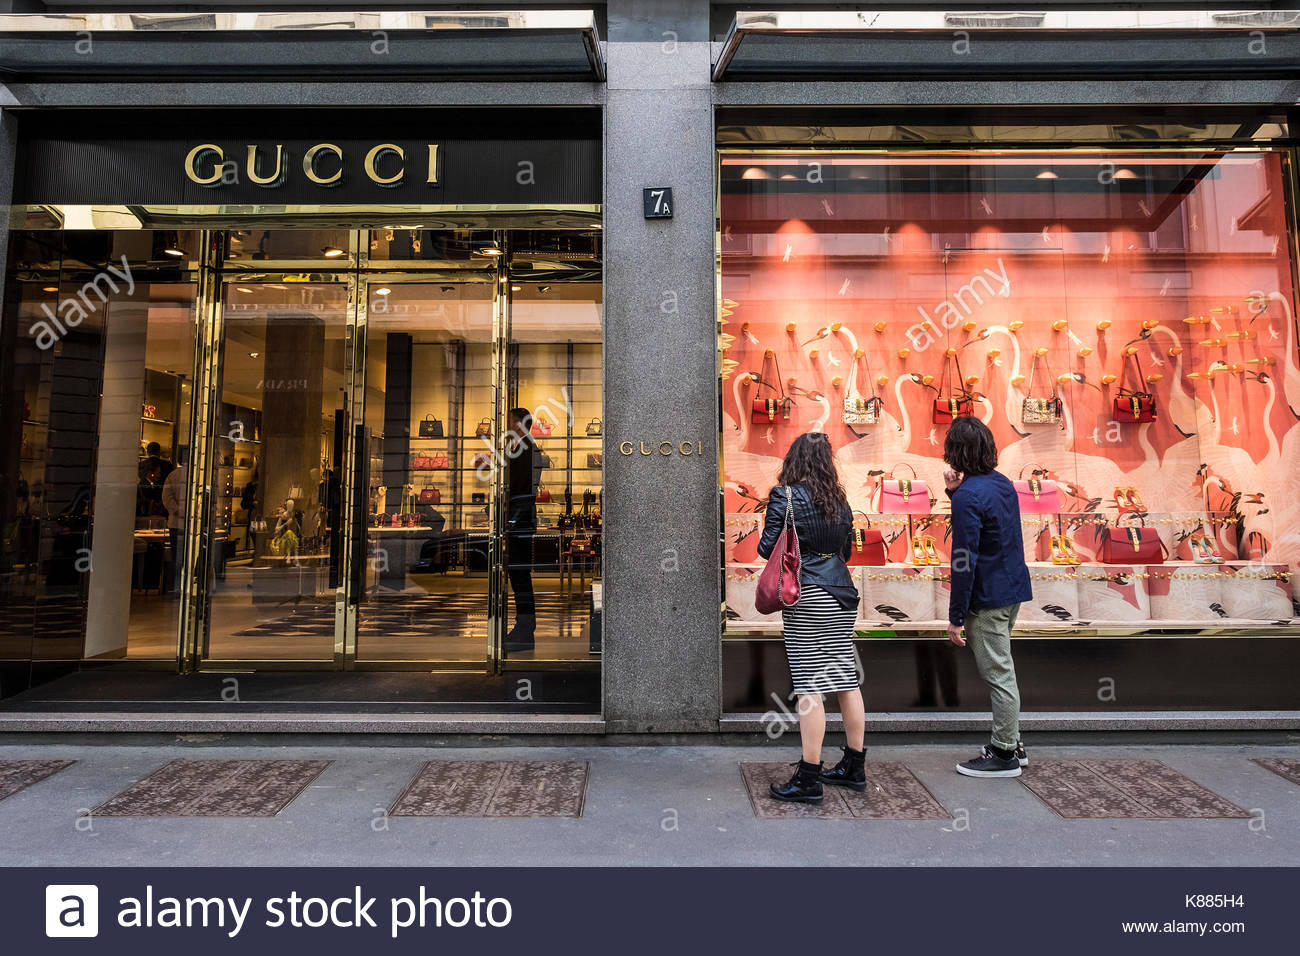 Italy Milan Via Montenapoleone Gucci High Resolution Stock Photography ...